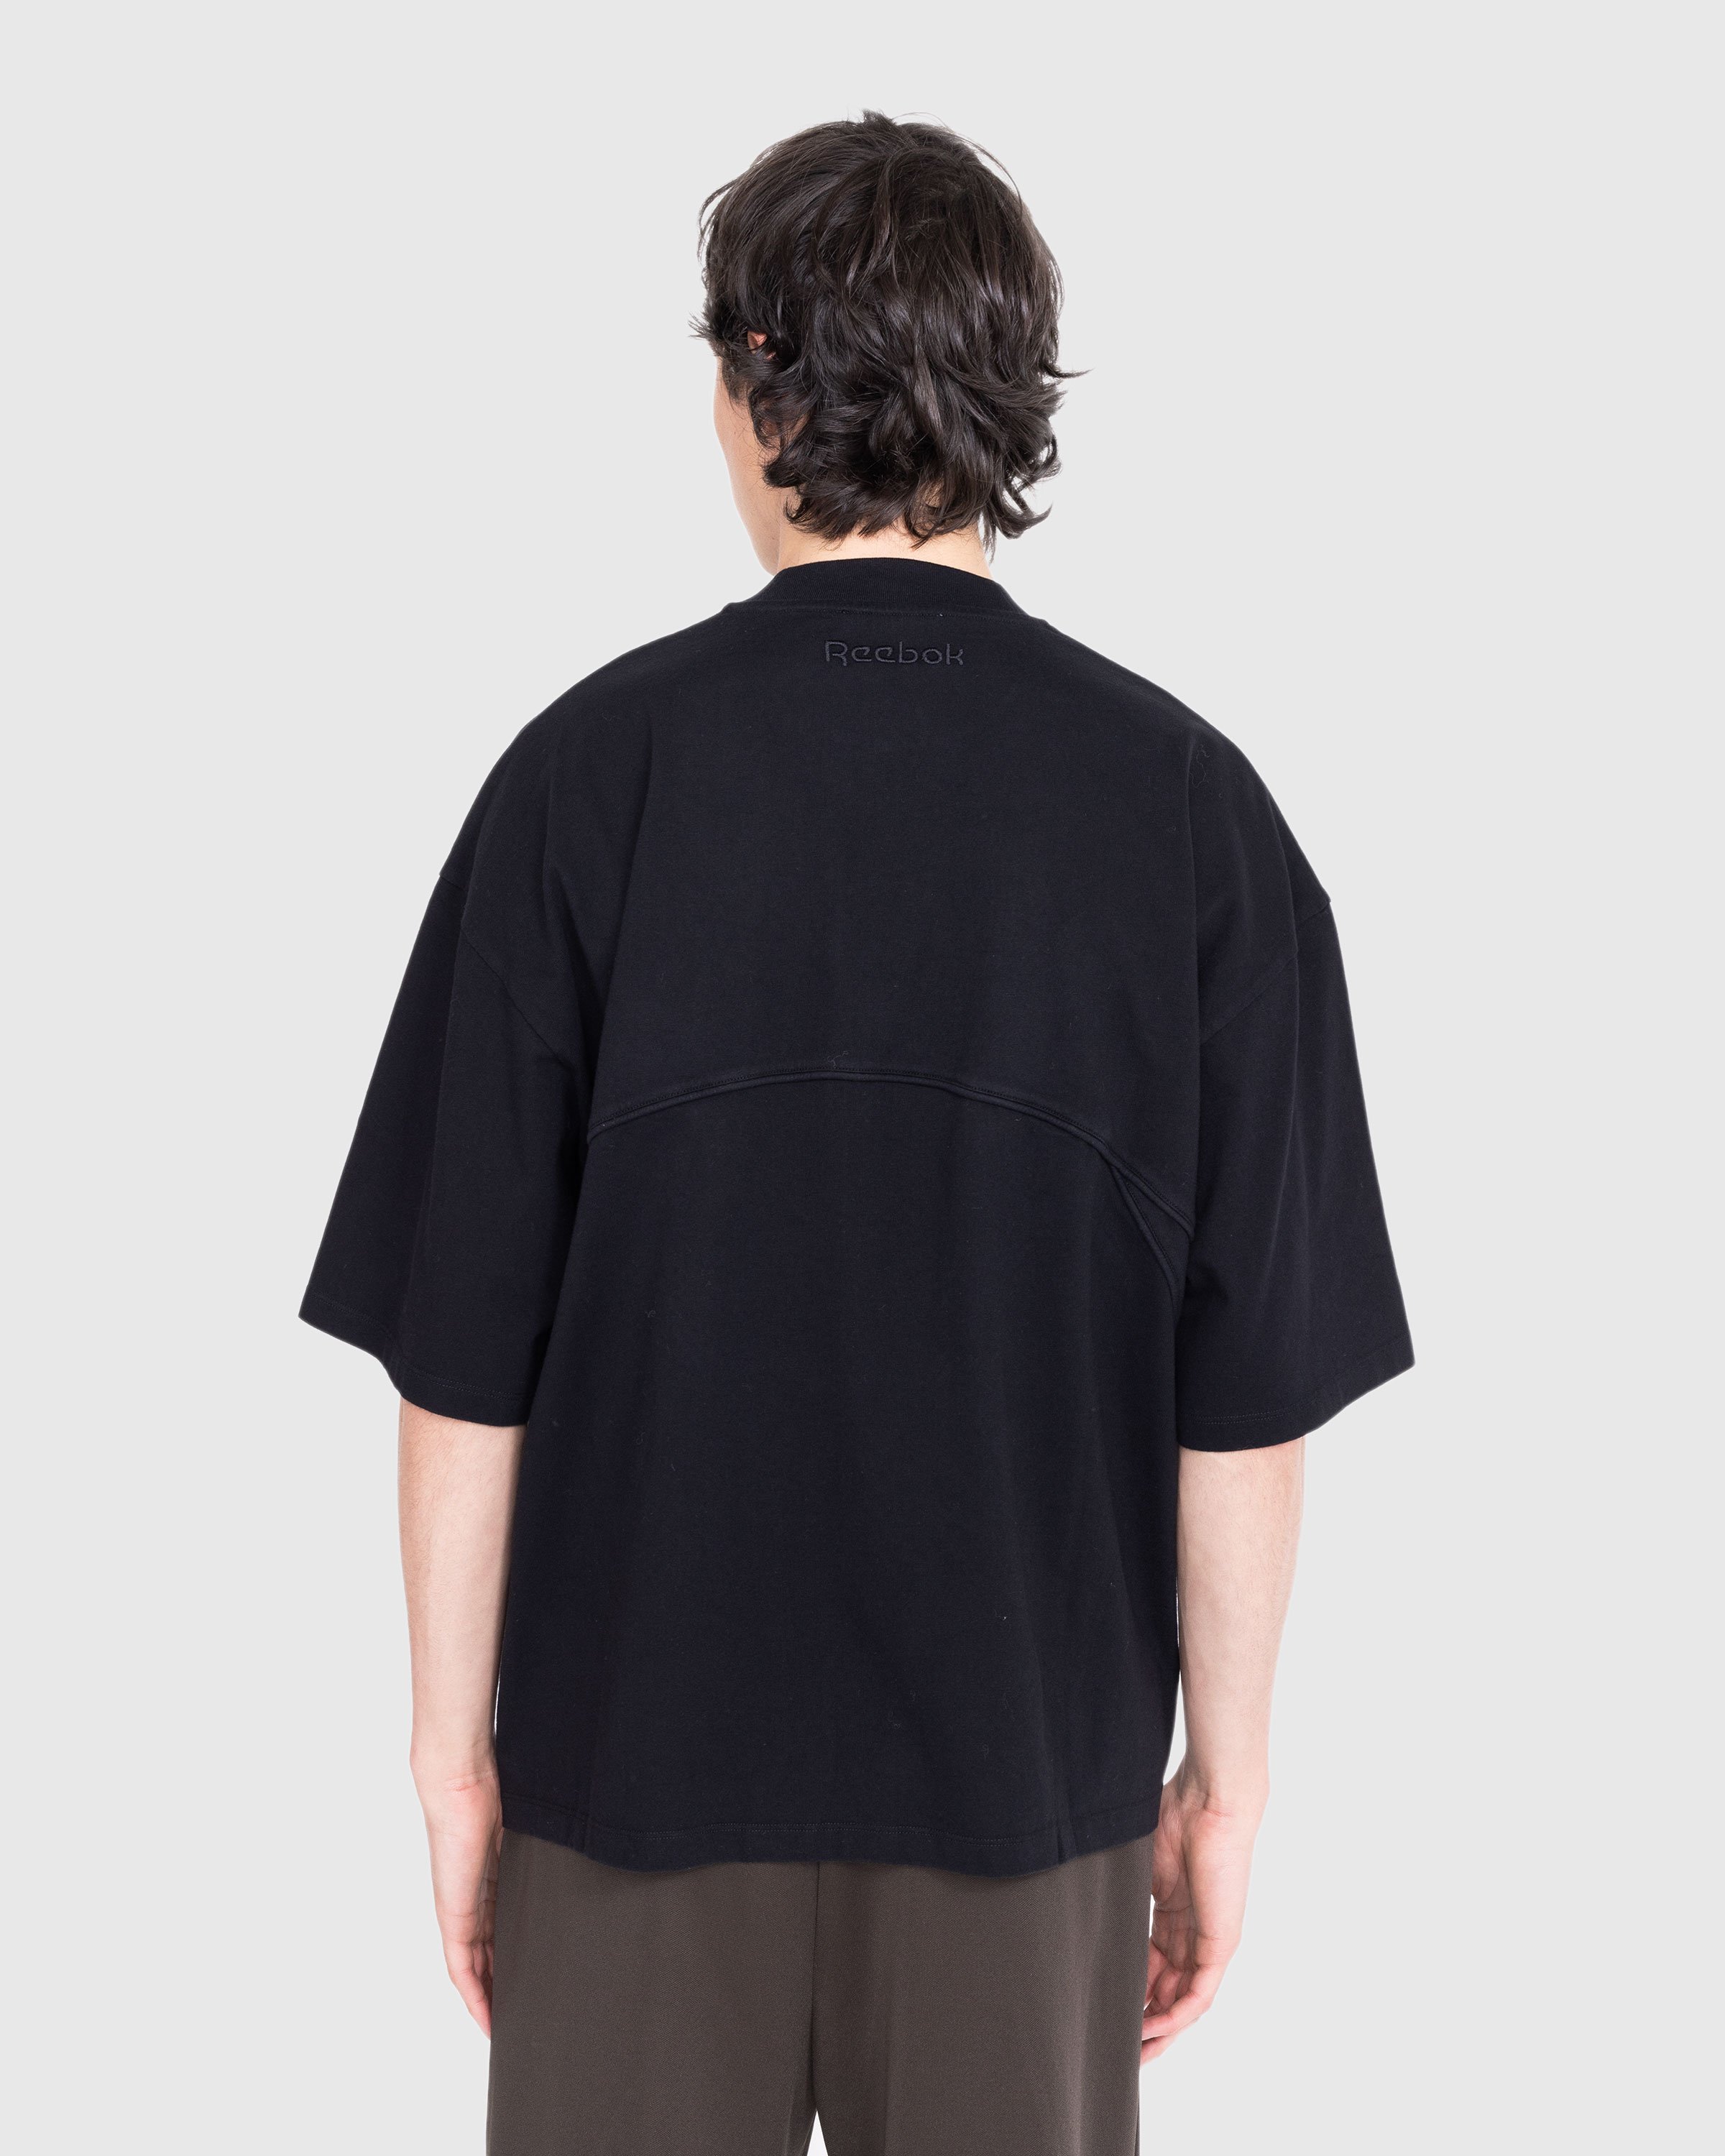 Reebok - Piped T-Shirt Black - Clothing - Black - Image 3